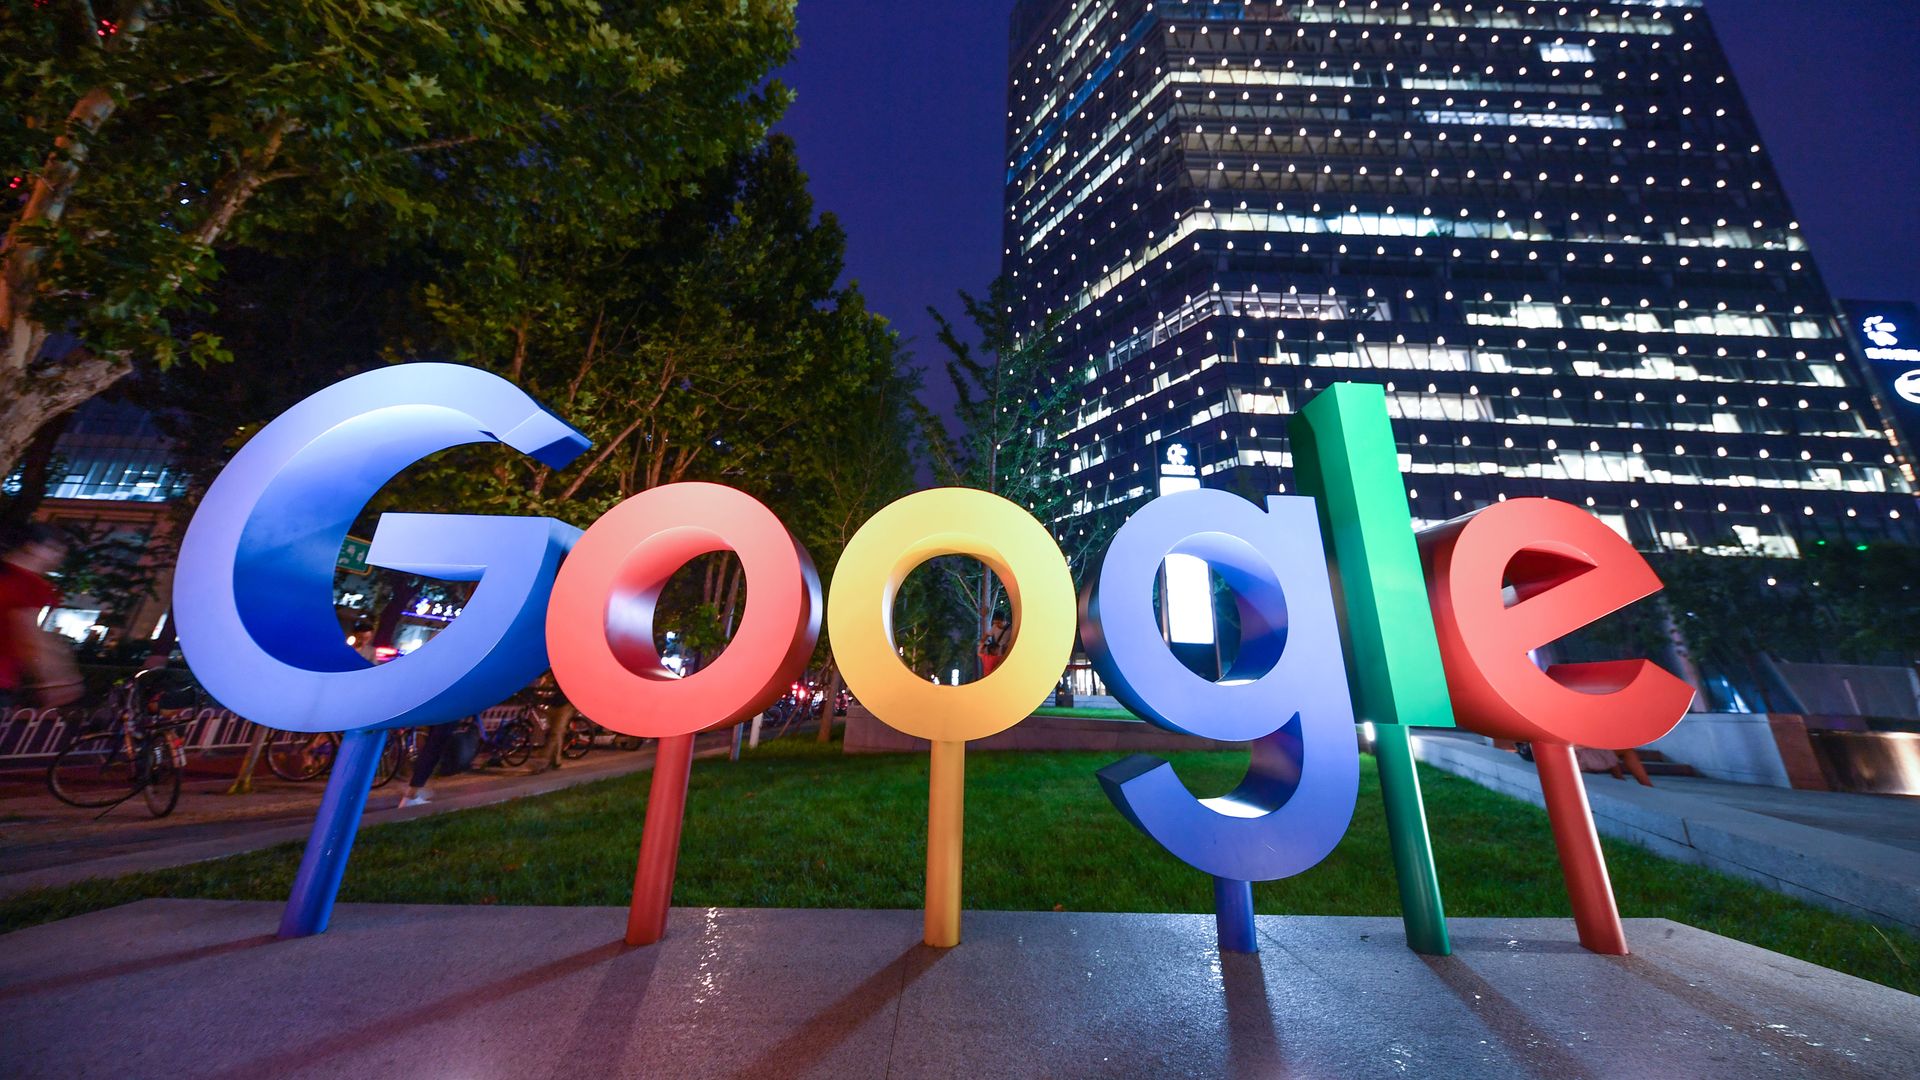 The Google logo in Beijing 